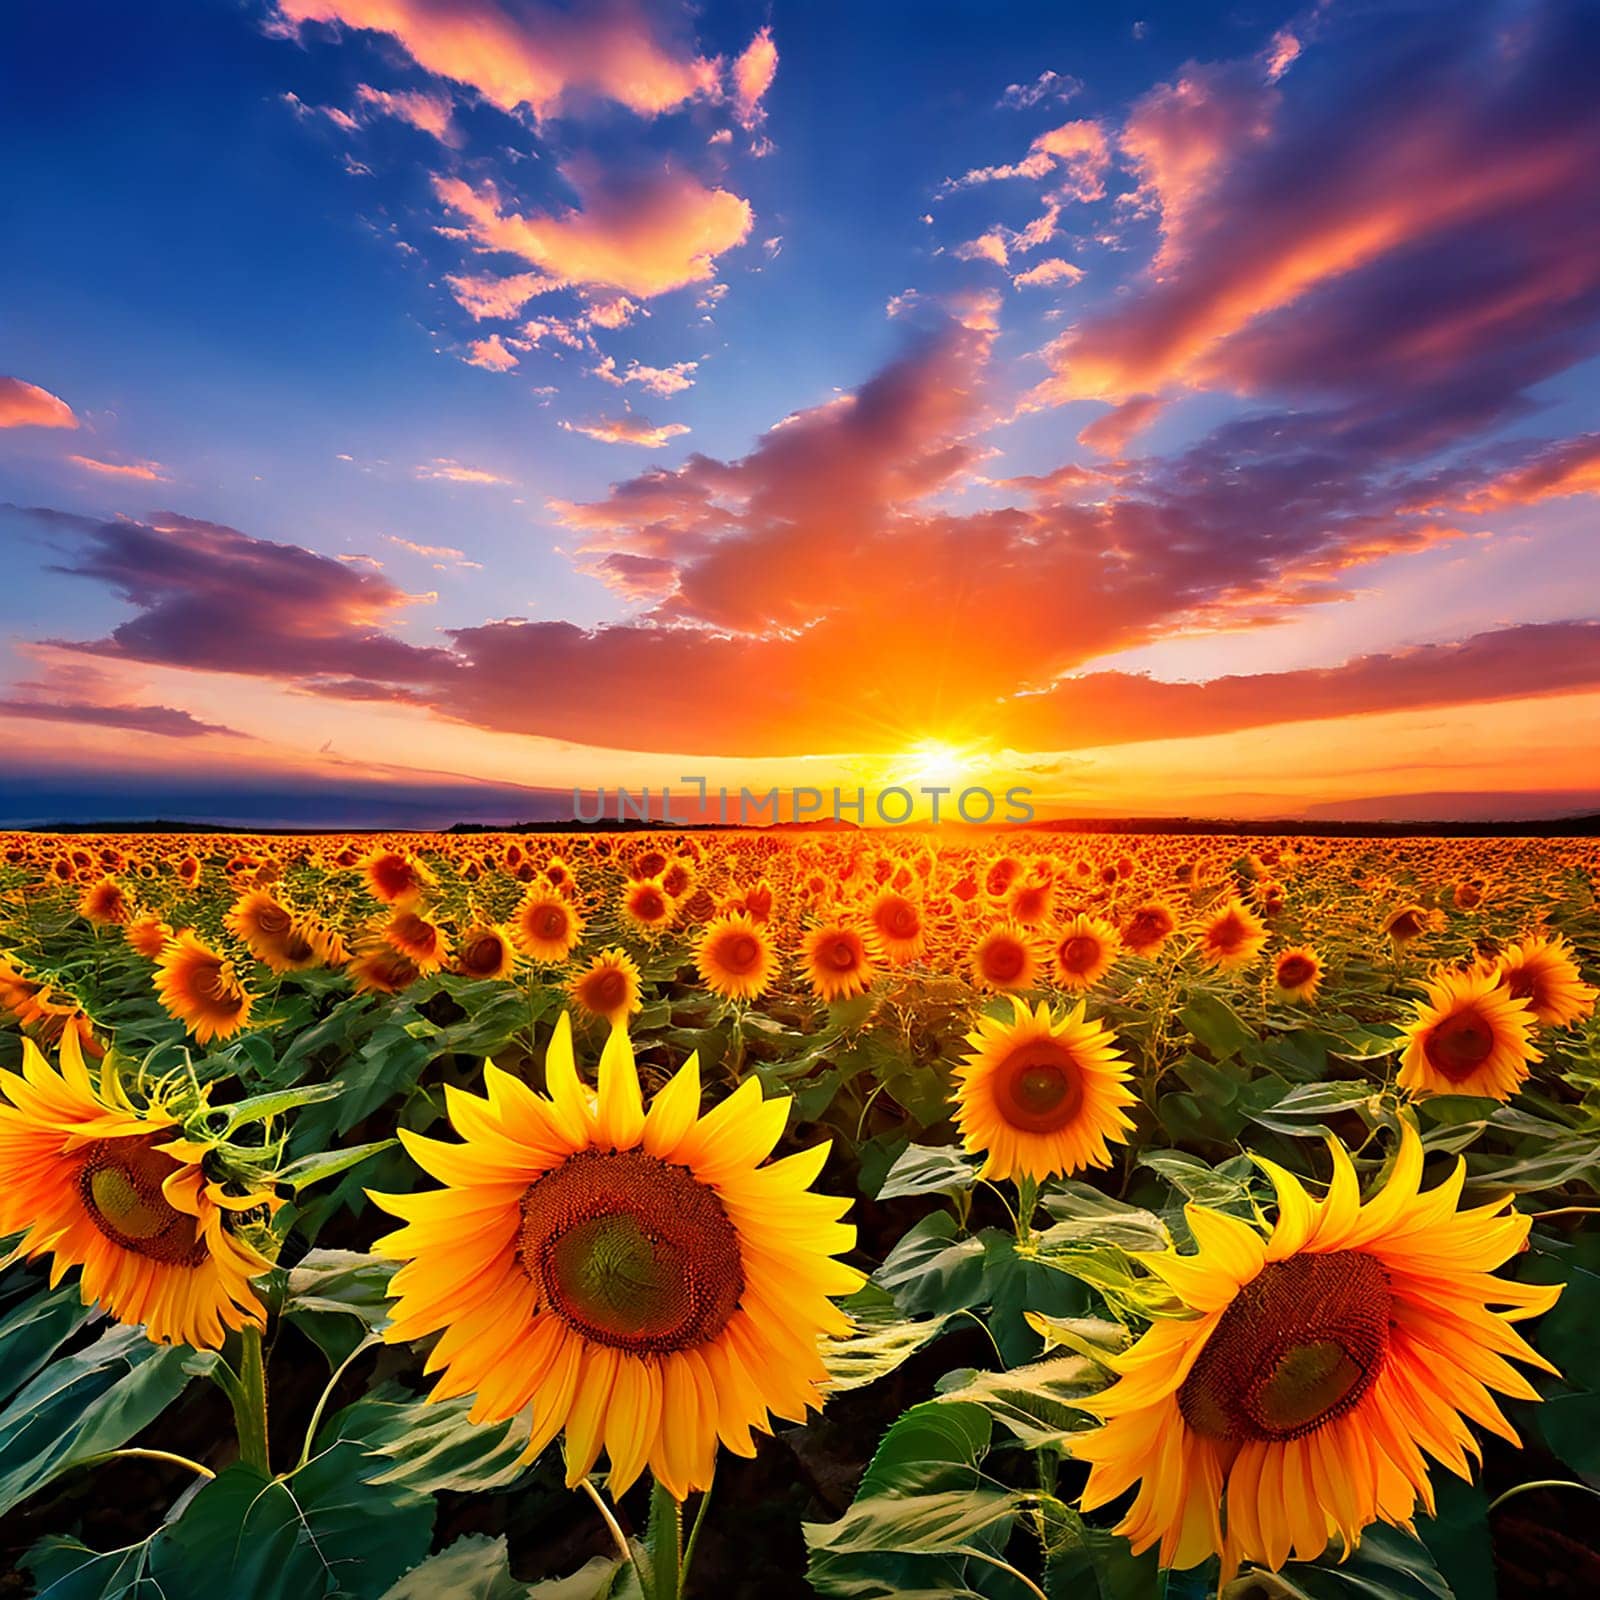 Stunning Sunset Over a Vast Sunflower Field by Petrichor